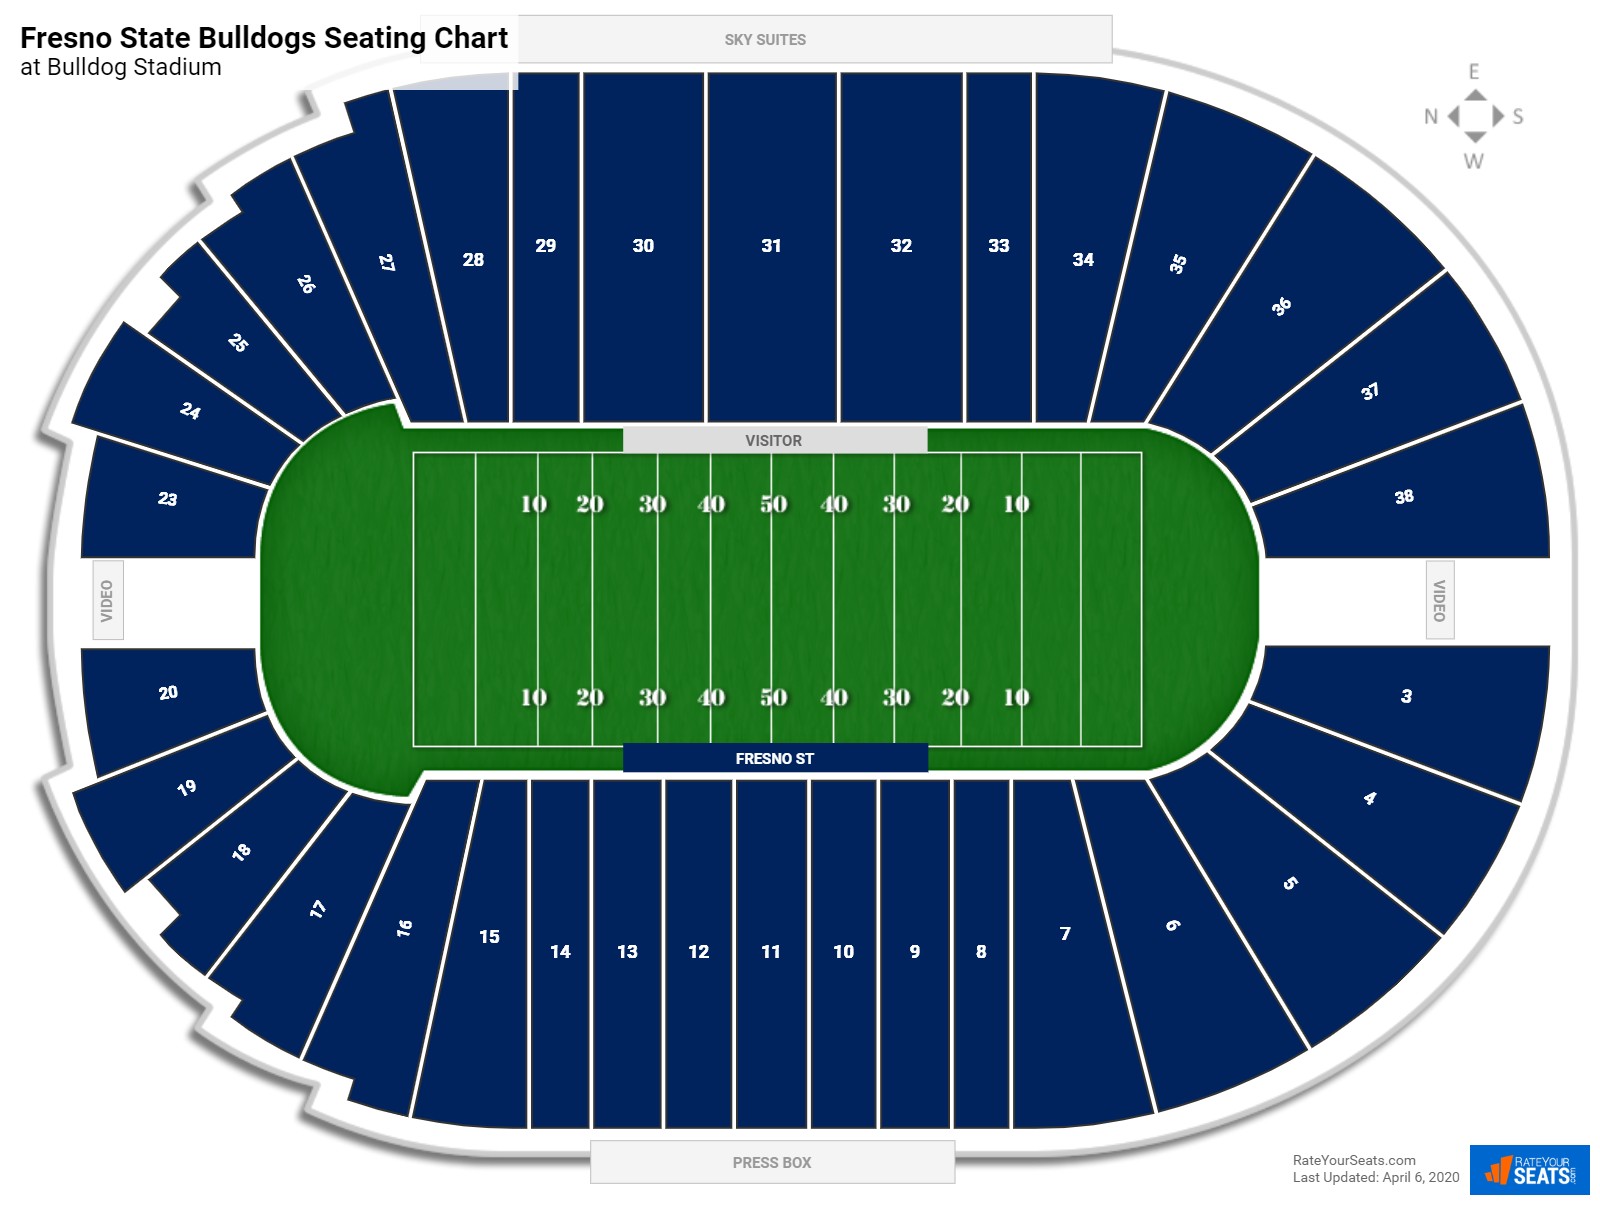 Bulldog Stadium Seating Charts